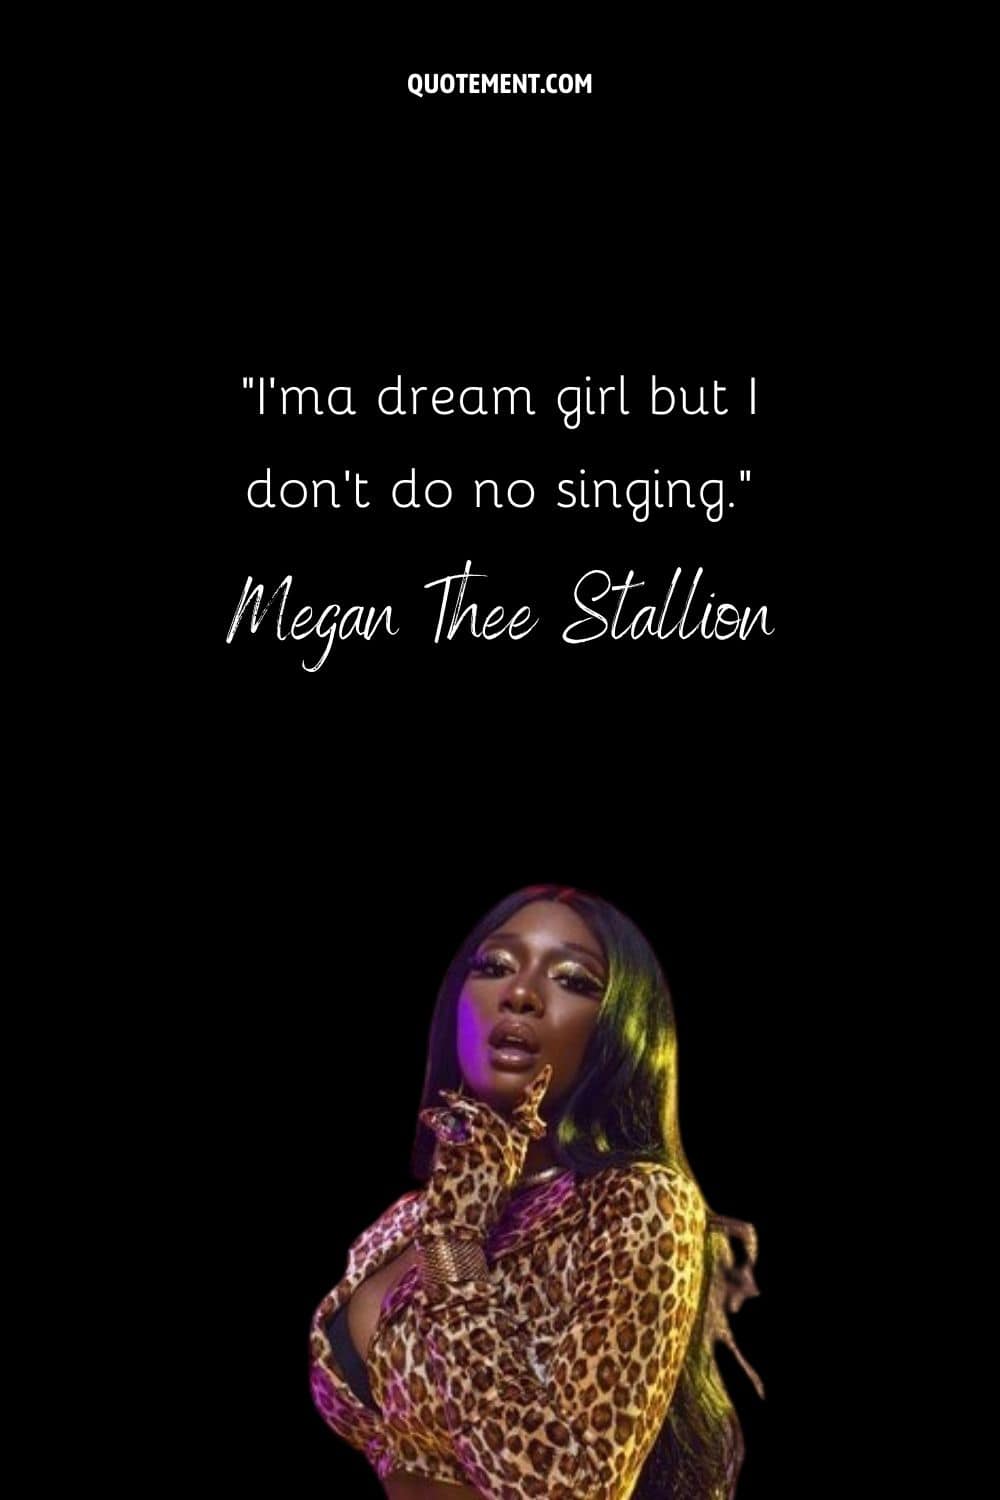 “I'ma dream girl but I don't do no singing.” — Megan Thee Stallion